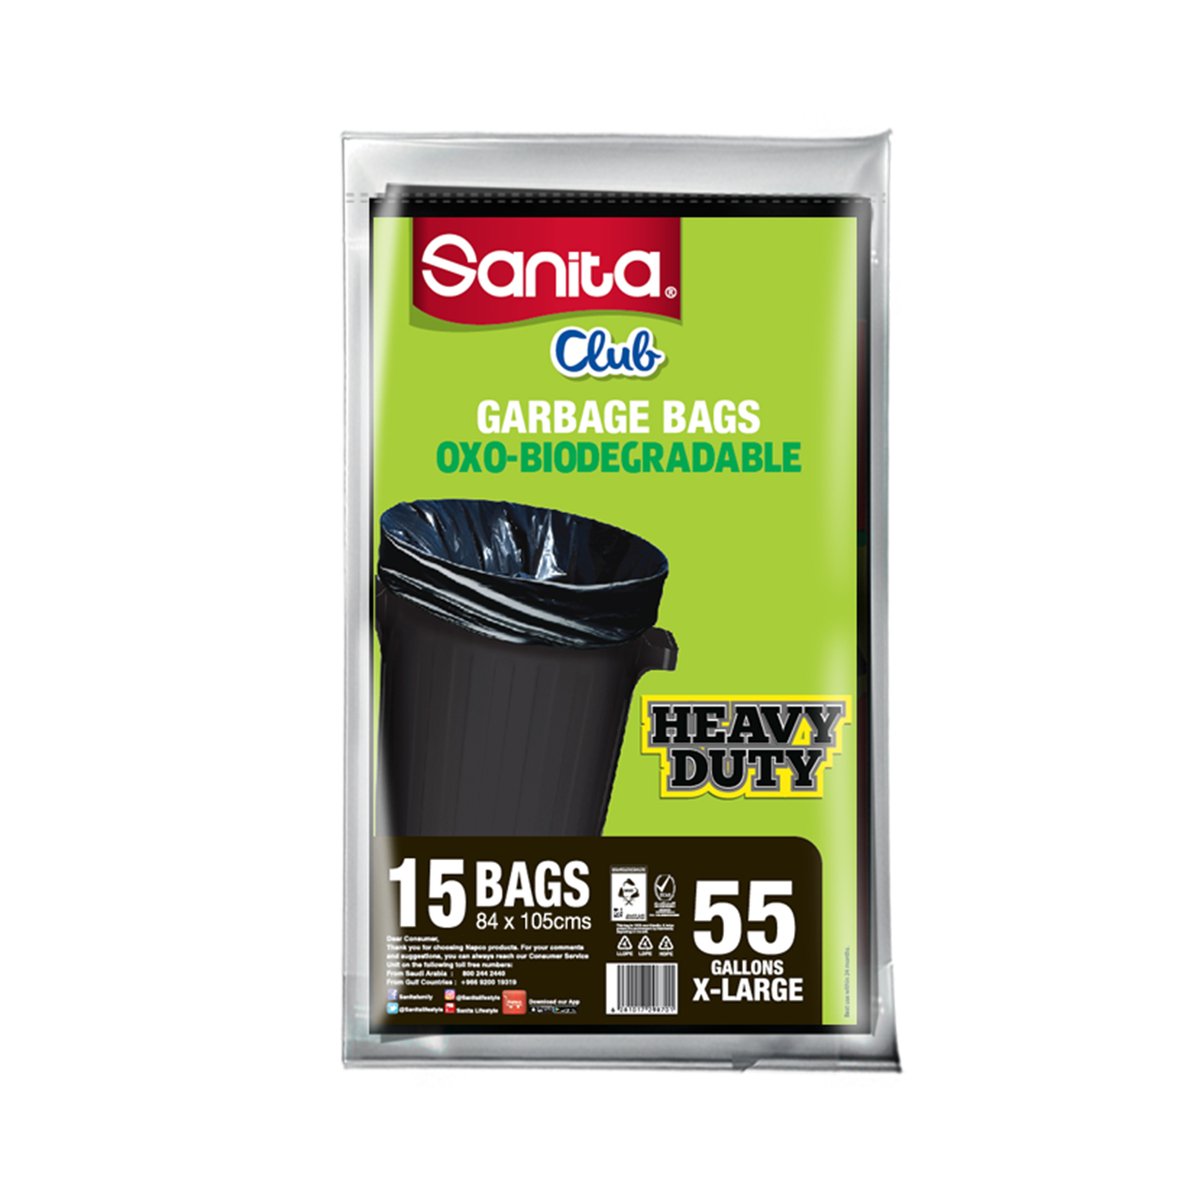 Sanita Club Garbage Bags Oxo-Biodegradable 55 Gallons X-Large Size 84 x 110cm 15pcs